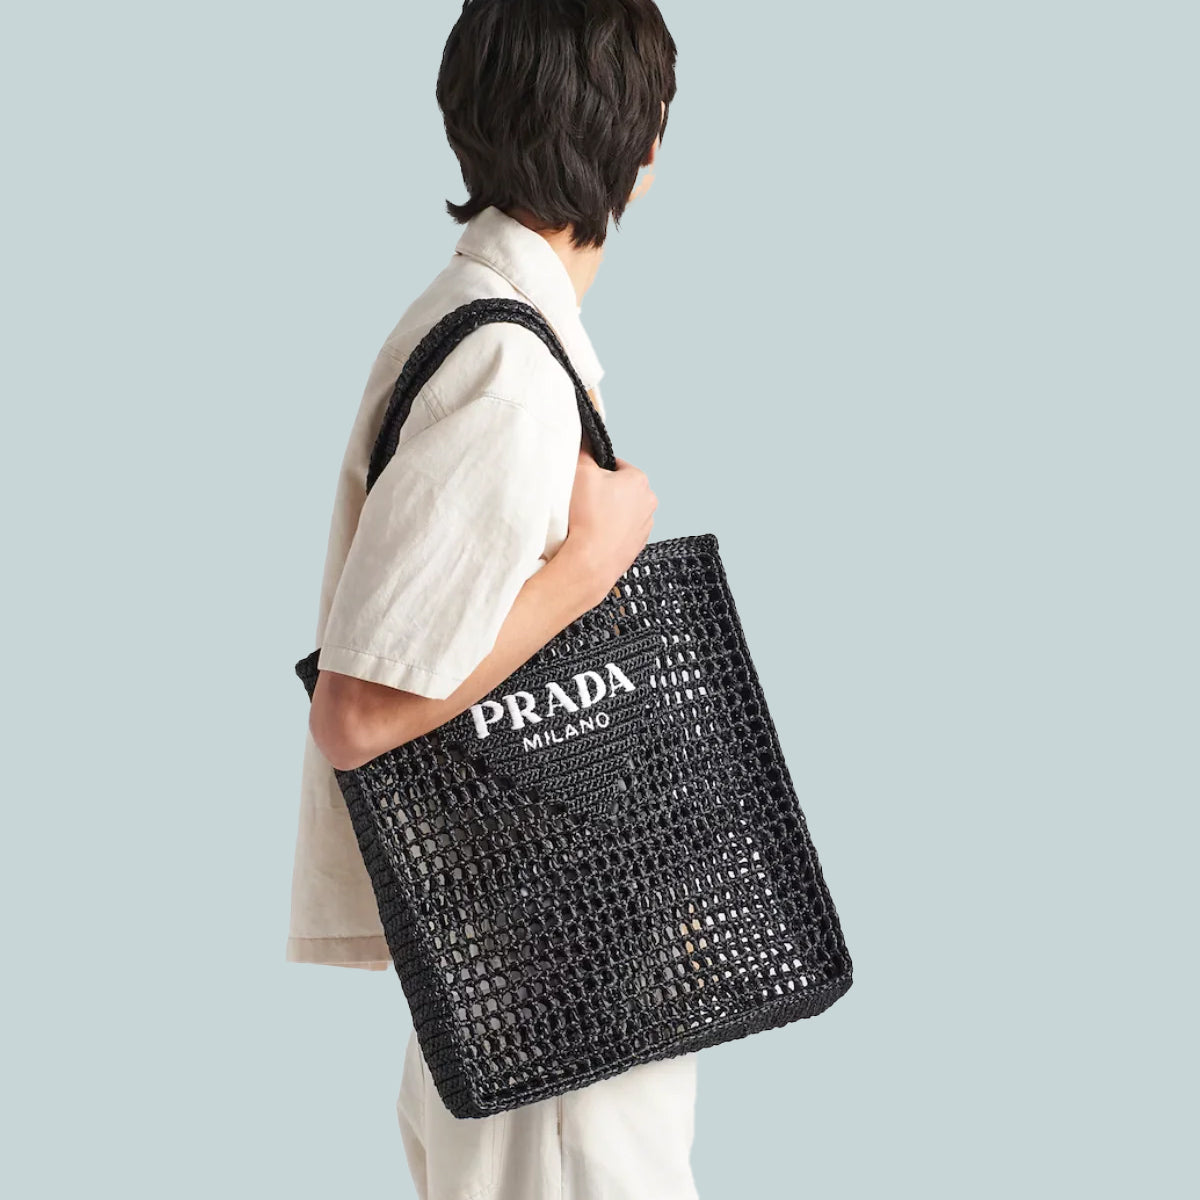 Crochet tote bag with logo black